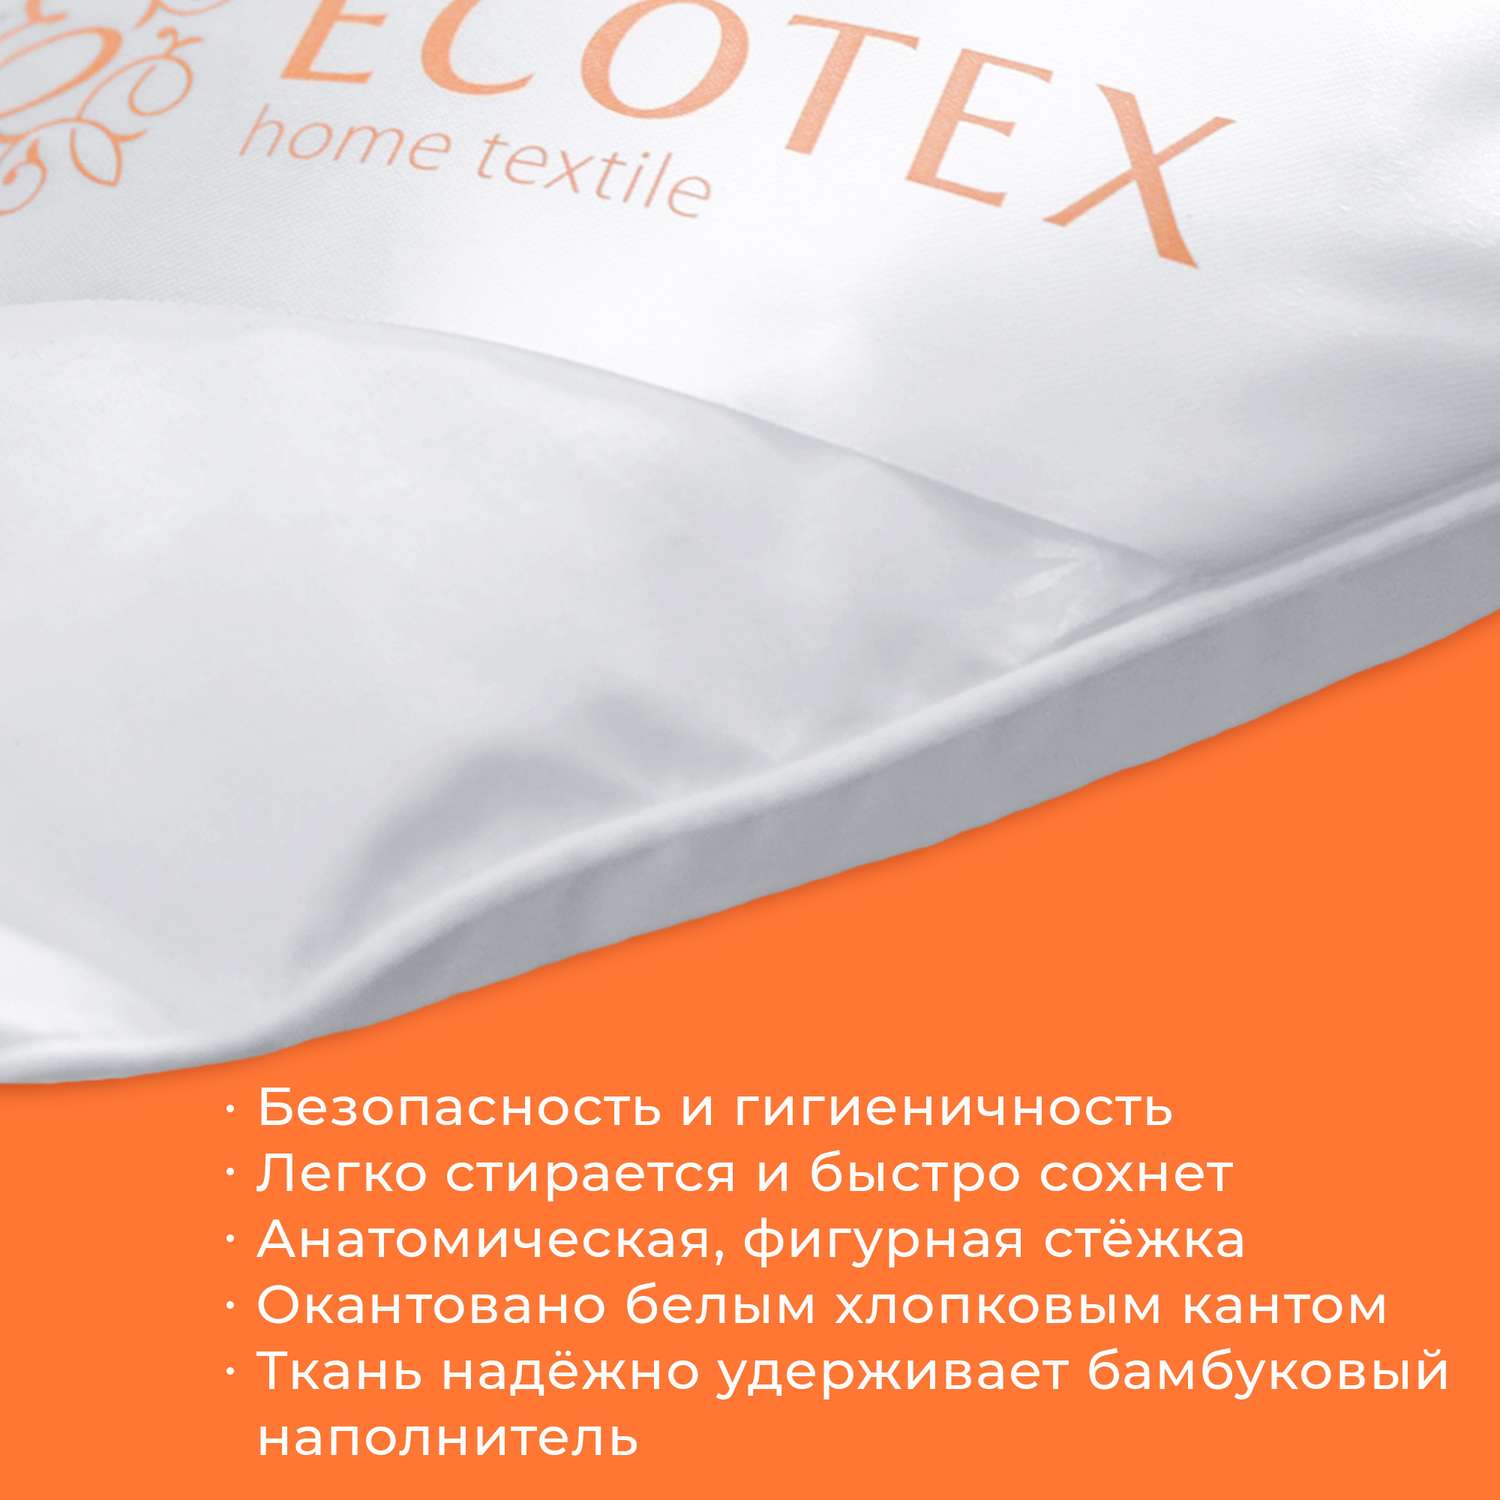 Одеяло ECOTEX home textile Бамбук 110х140 детское - фото 3